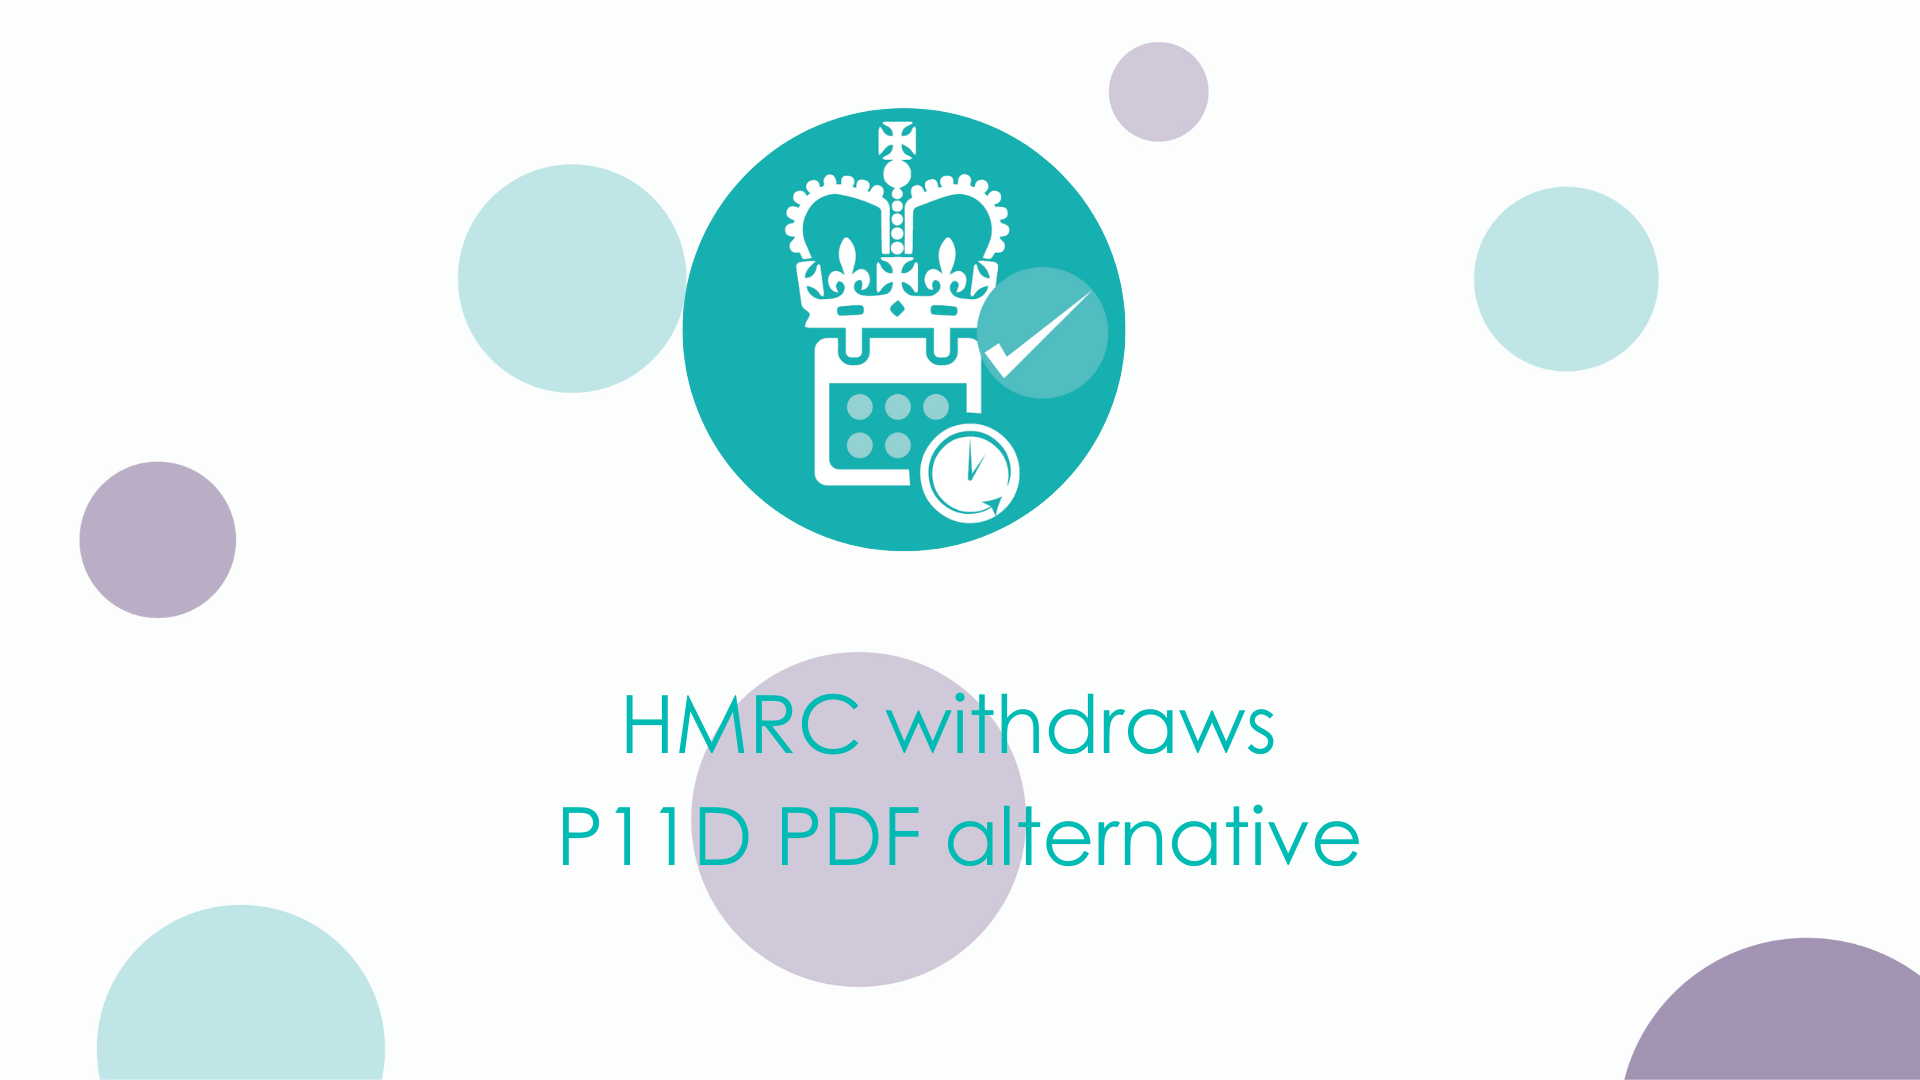 HMRC withdraws P11D PDF alternative